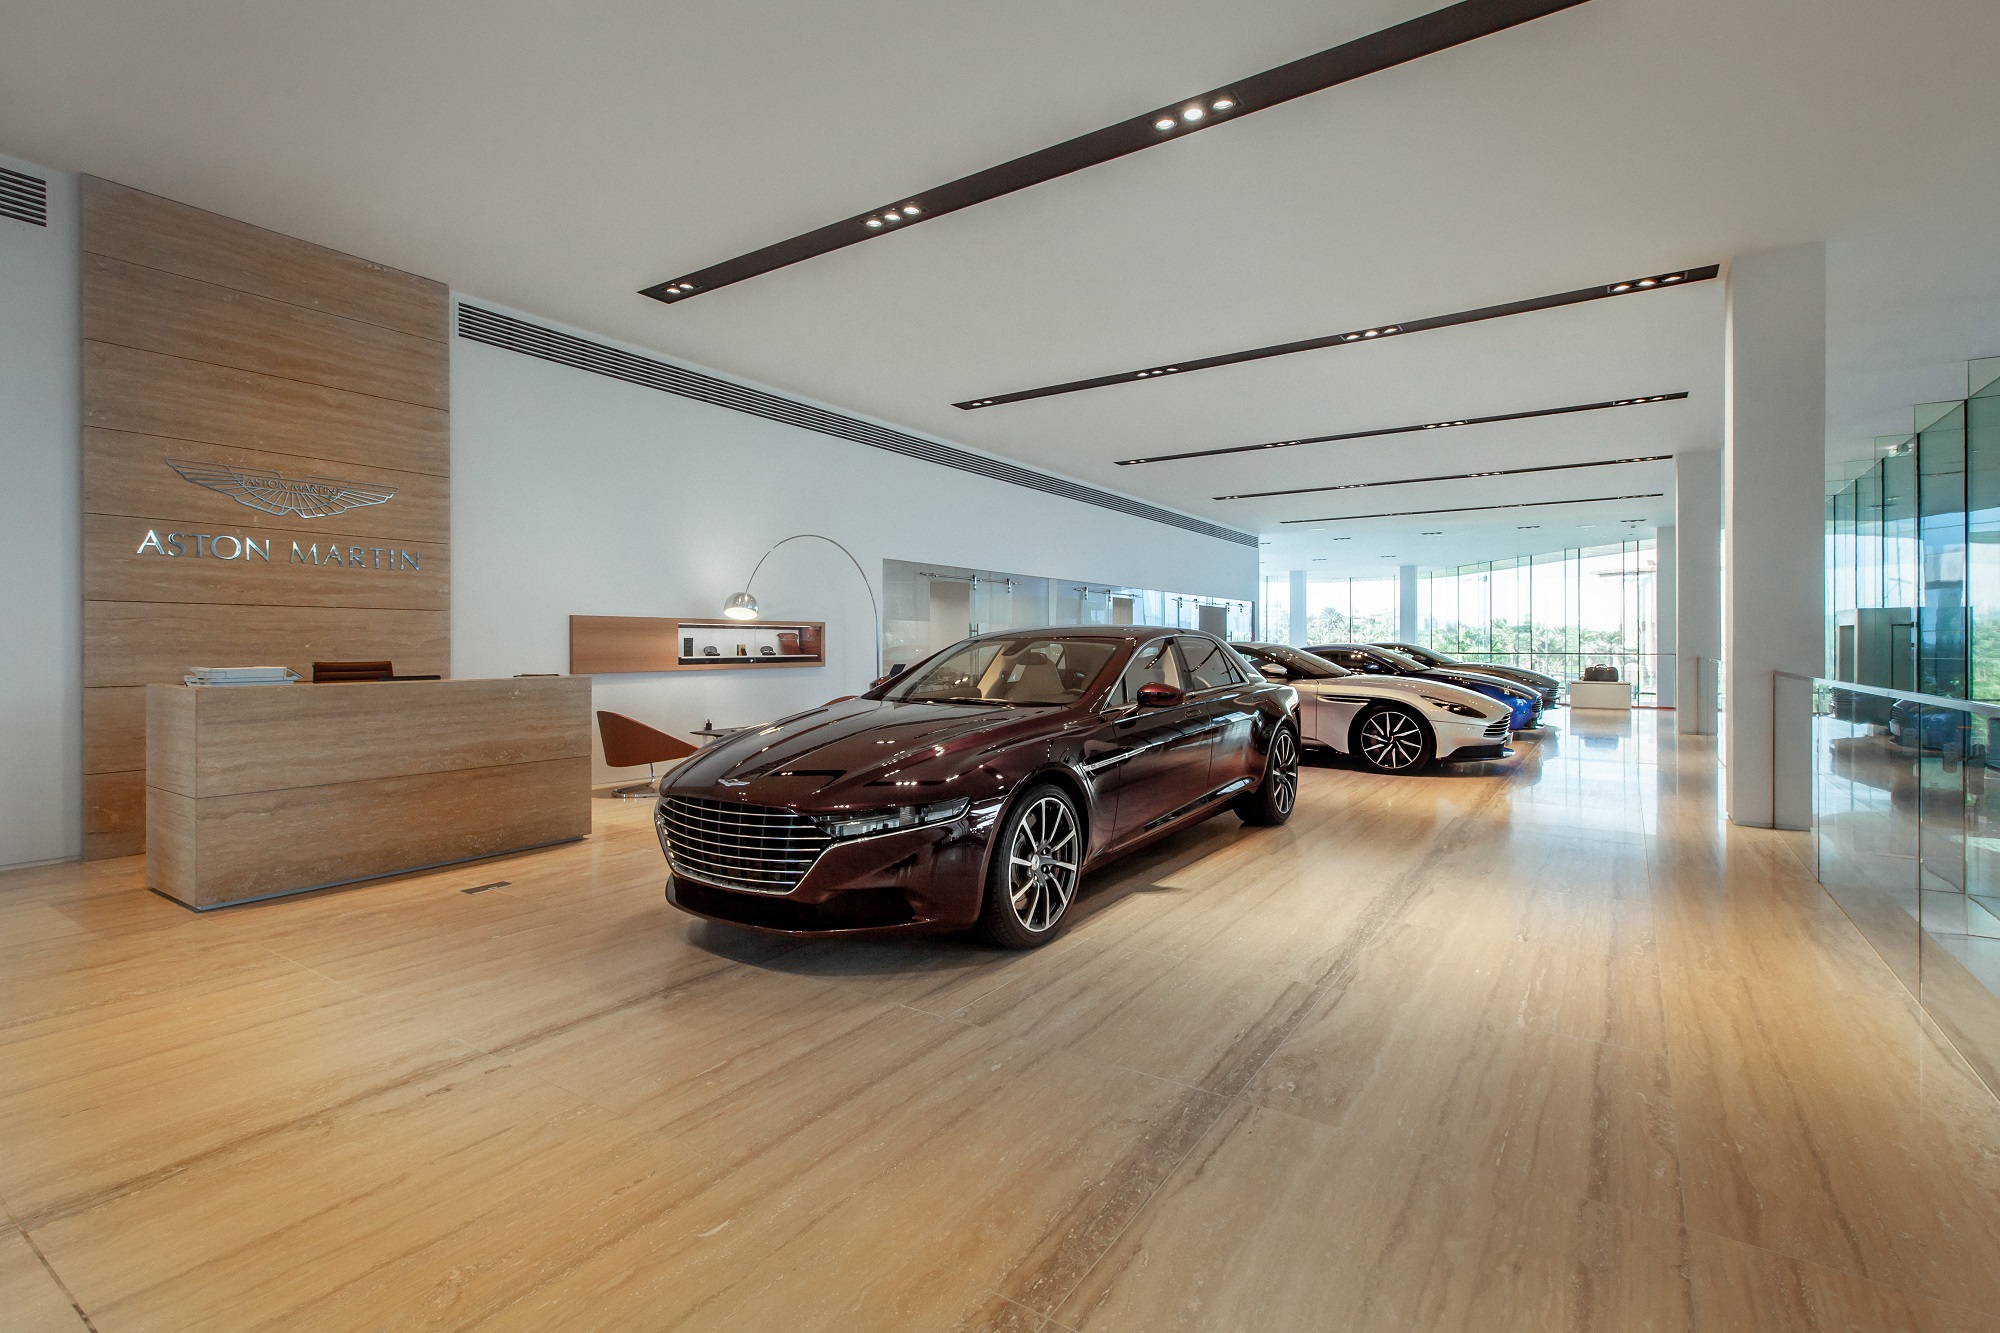 Aston Martin Lagonda Abu Dhabi News 6SpeedOnline.com